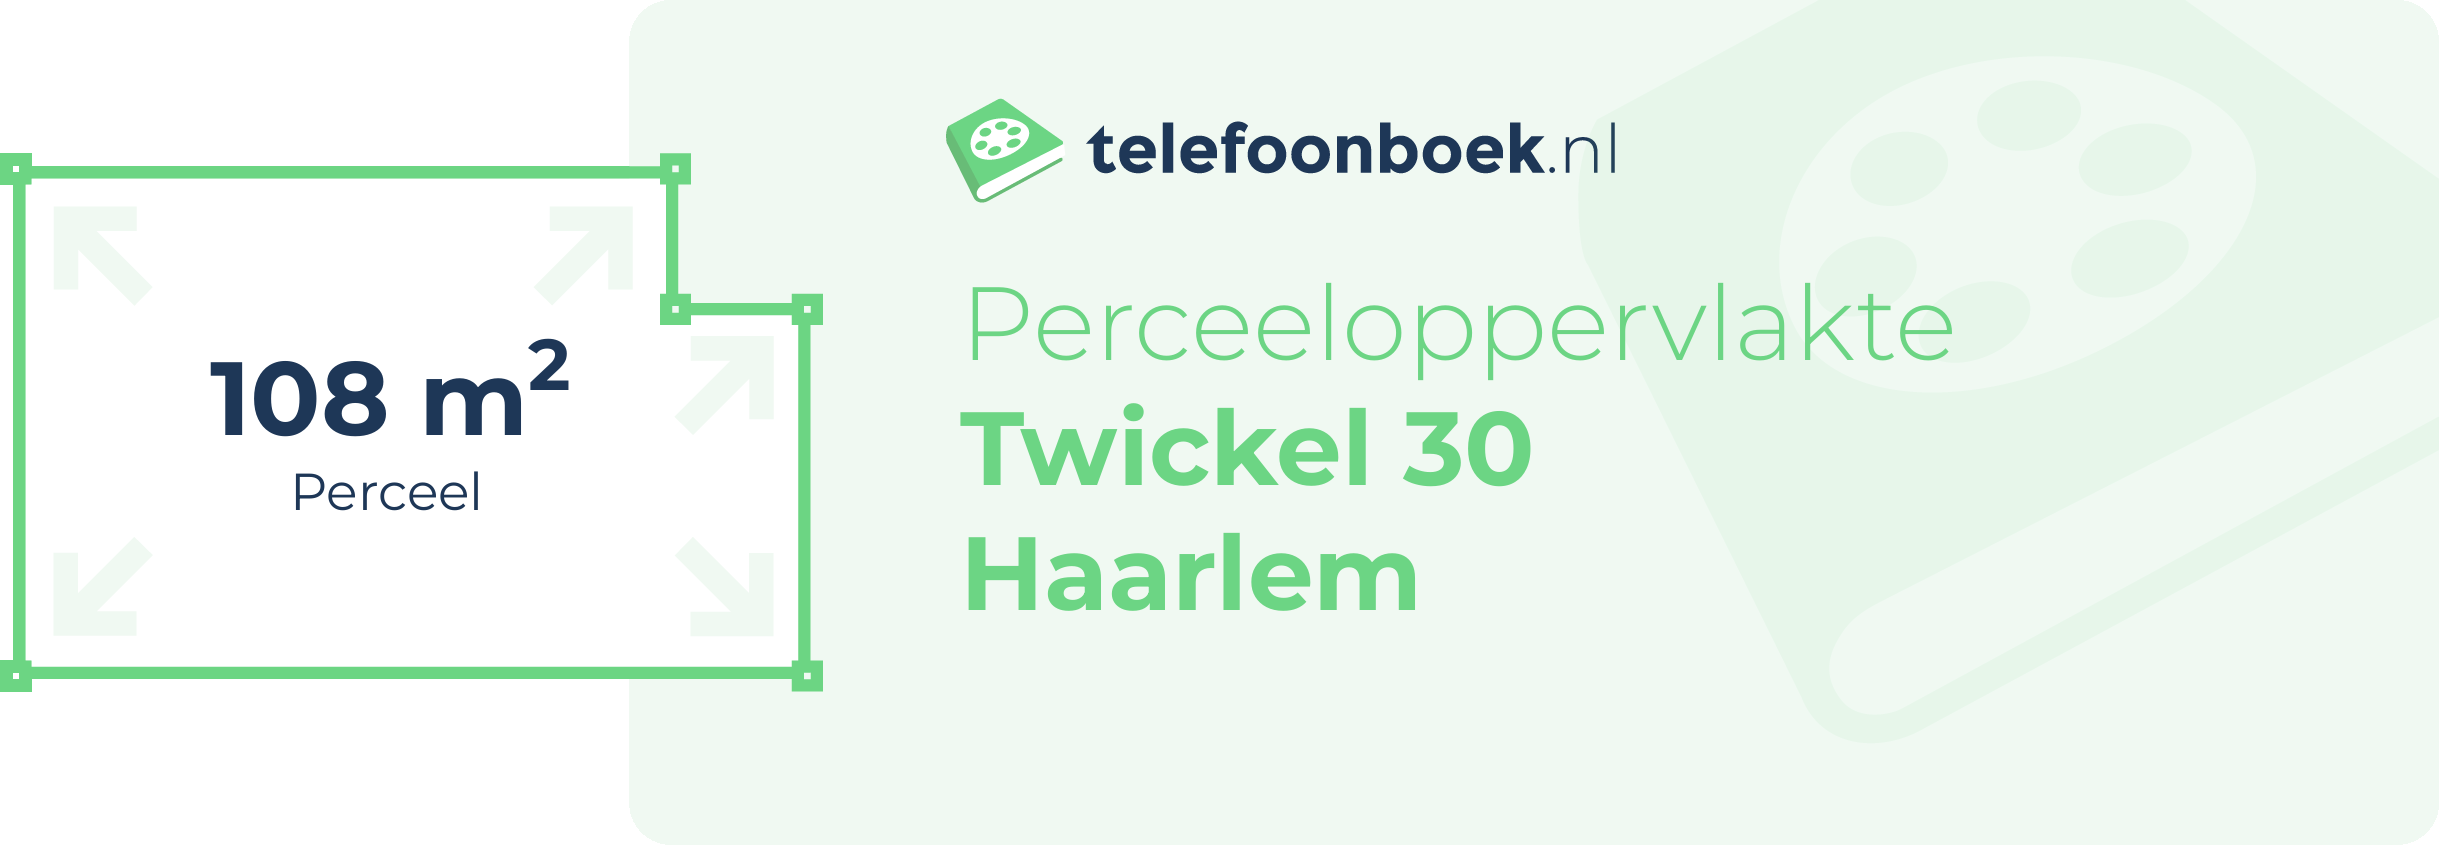 Perceeloppervlakte Twickel 30 Haarlem